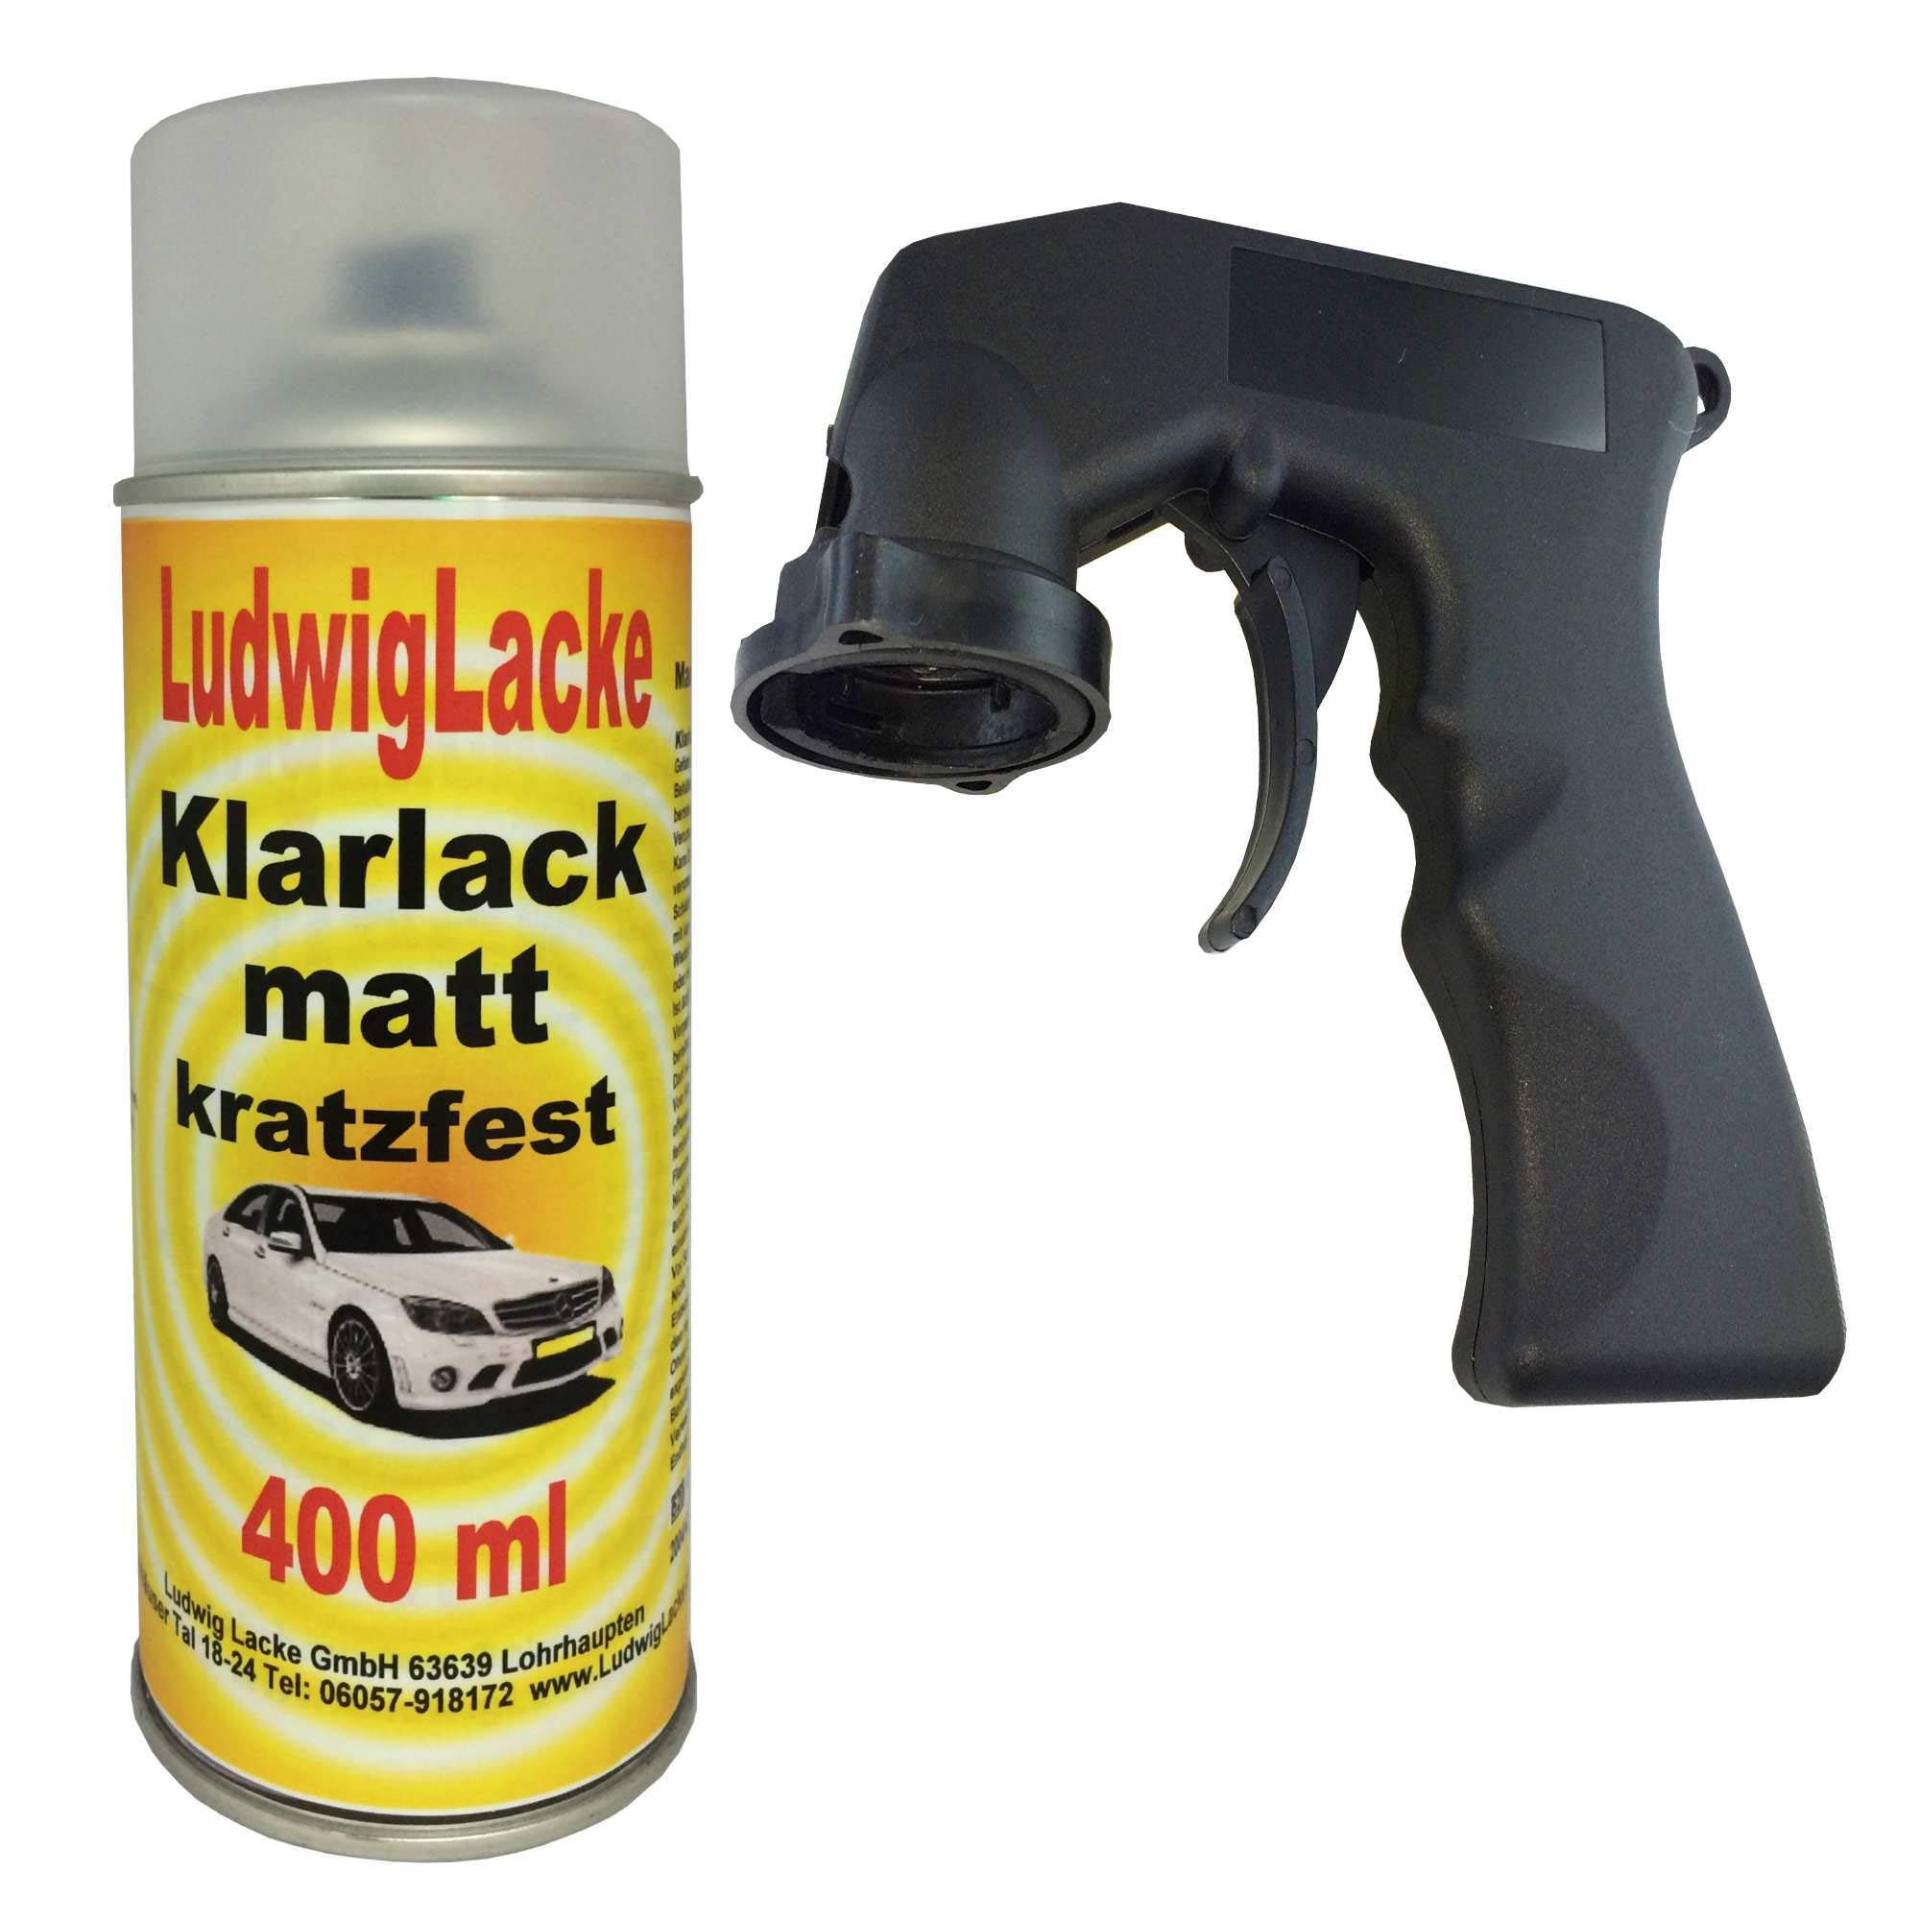 Klarlack matt Spraydose 1 x 400ml Plus Haltegriff von Ludwiglacke